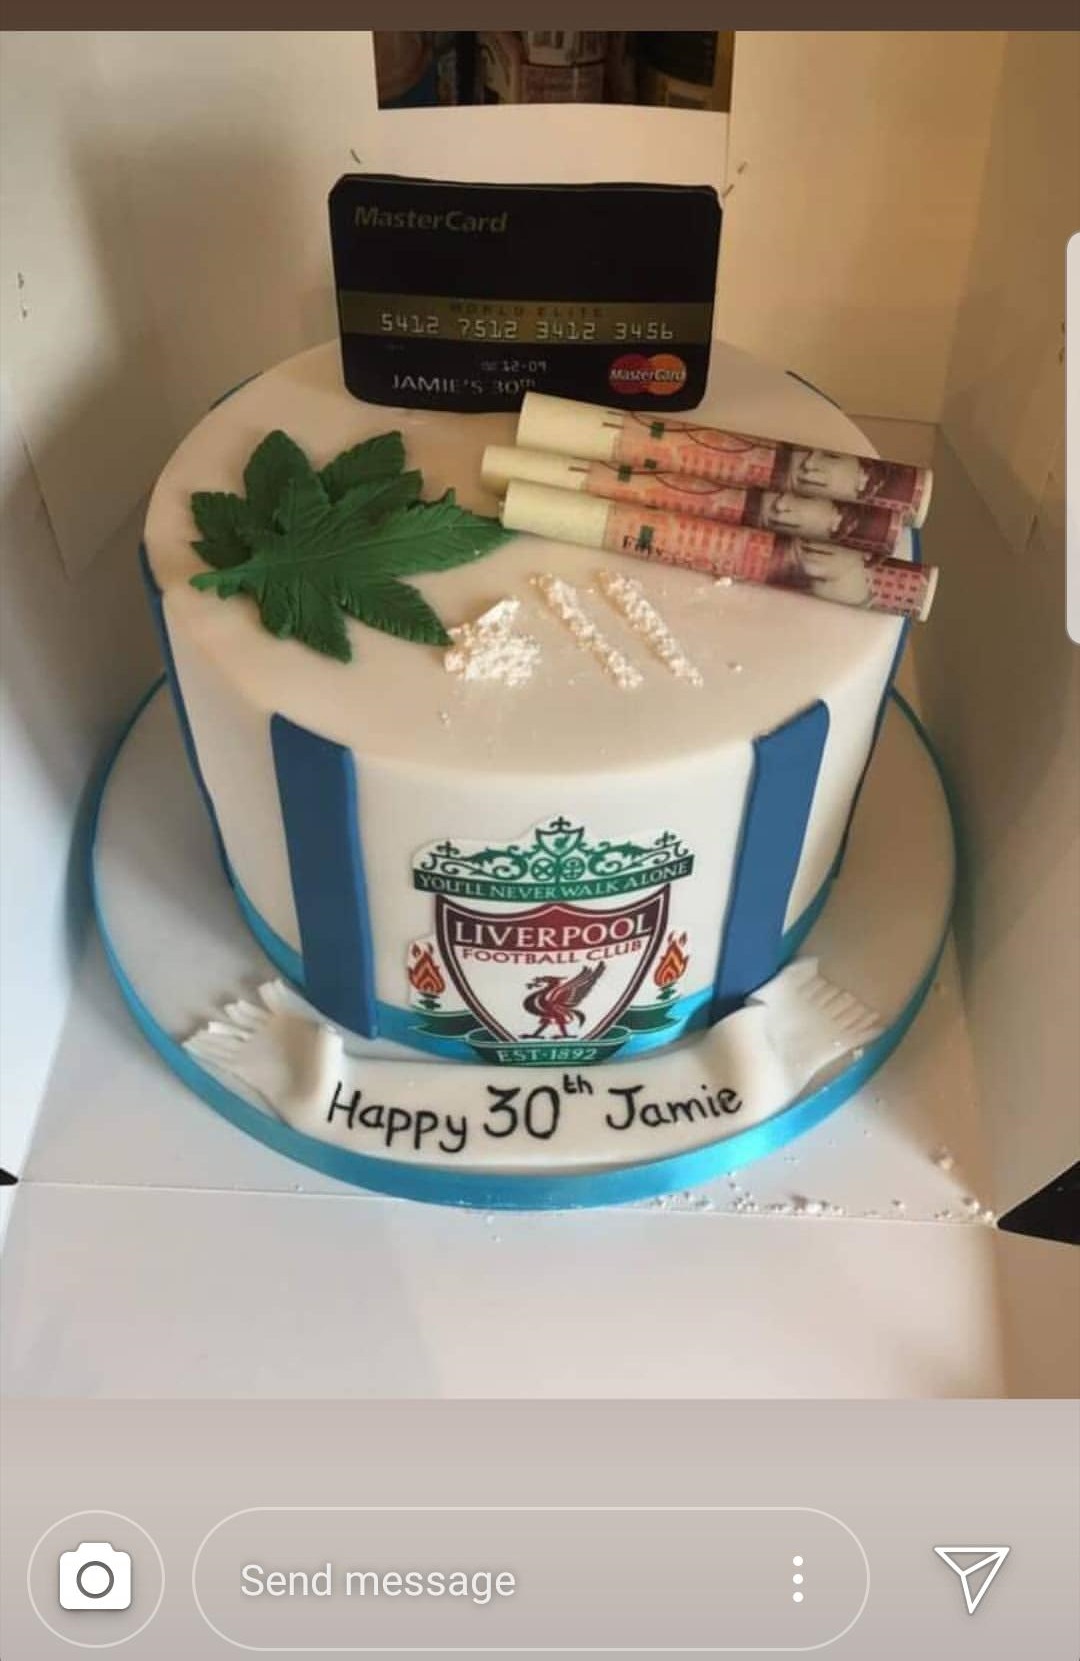 liverpool cake - MasterCard 5412 2512 4123456 2.0 Jamie'S 30 You'Ll Never Walk Liverpool Football Clo Est 1892 Happy 30 h Jamie Send message Send message V